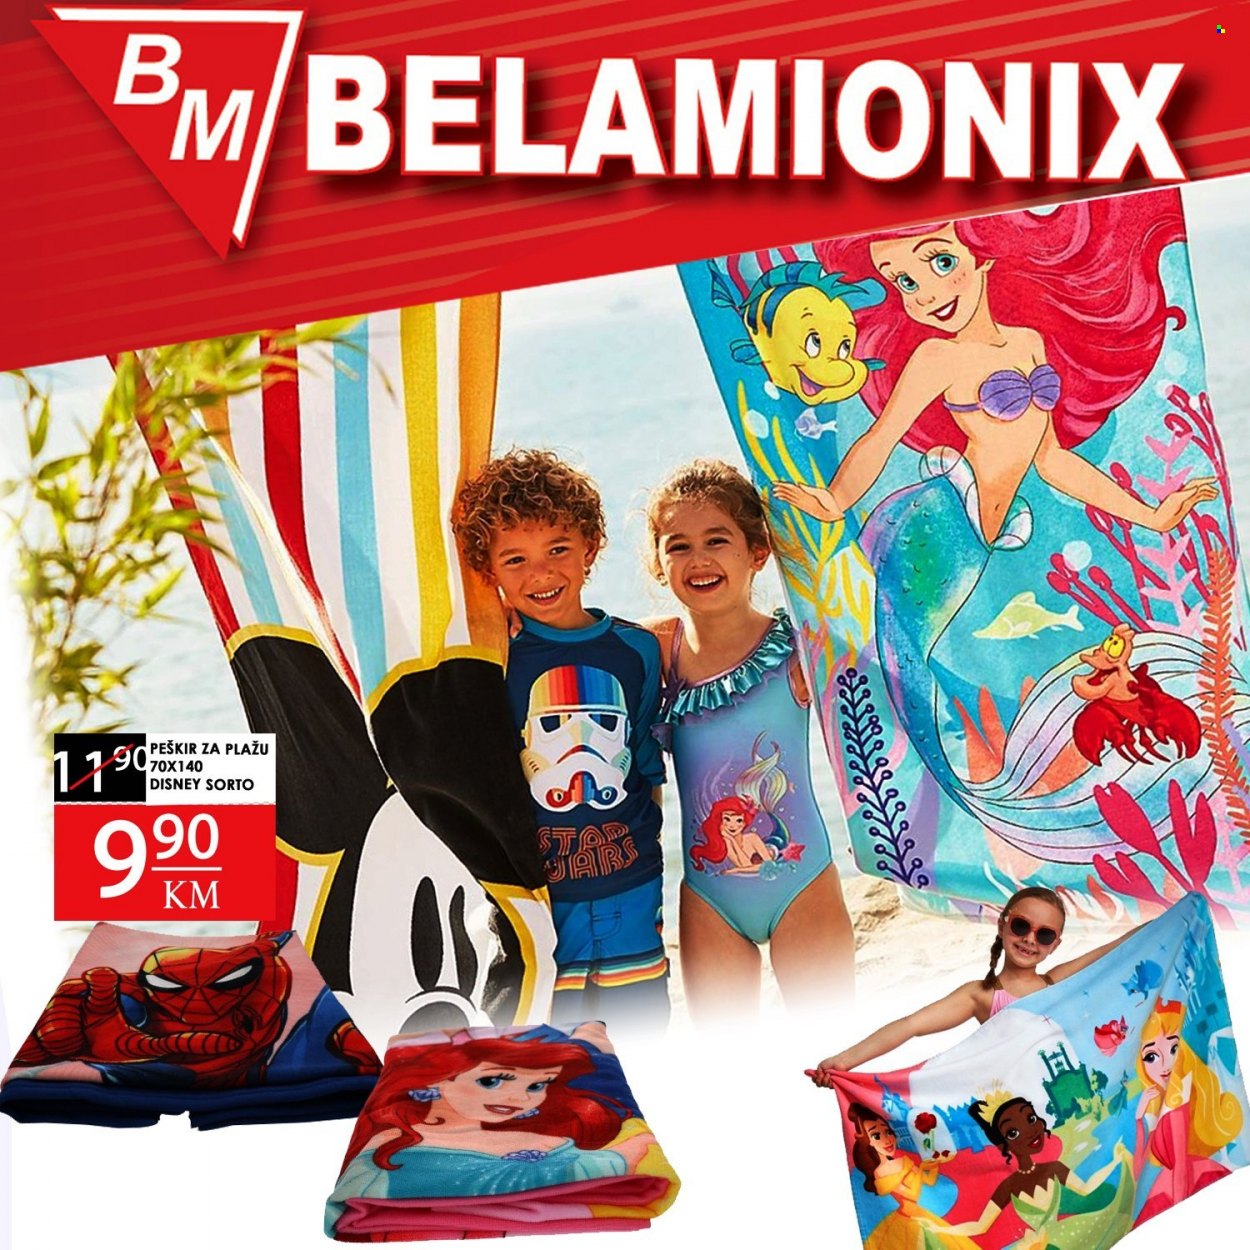 thumbnail - Belamionix katalog - Sniženi proizvodi - Disney, peškir, peškir za plažu. Stranica 2.